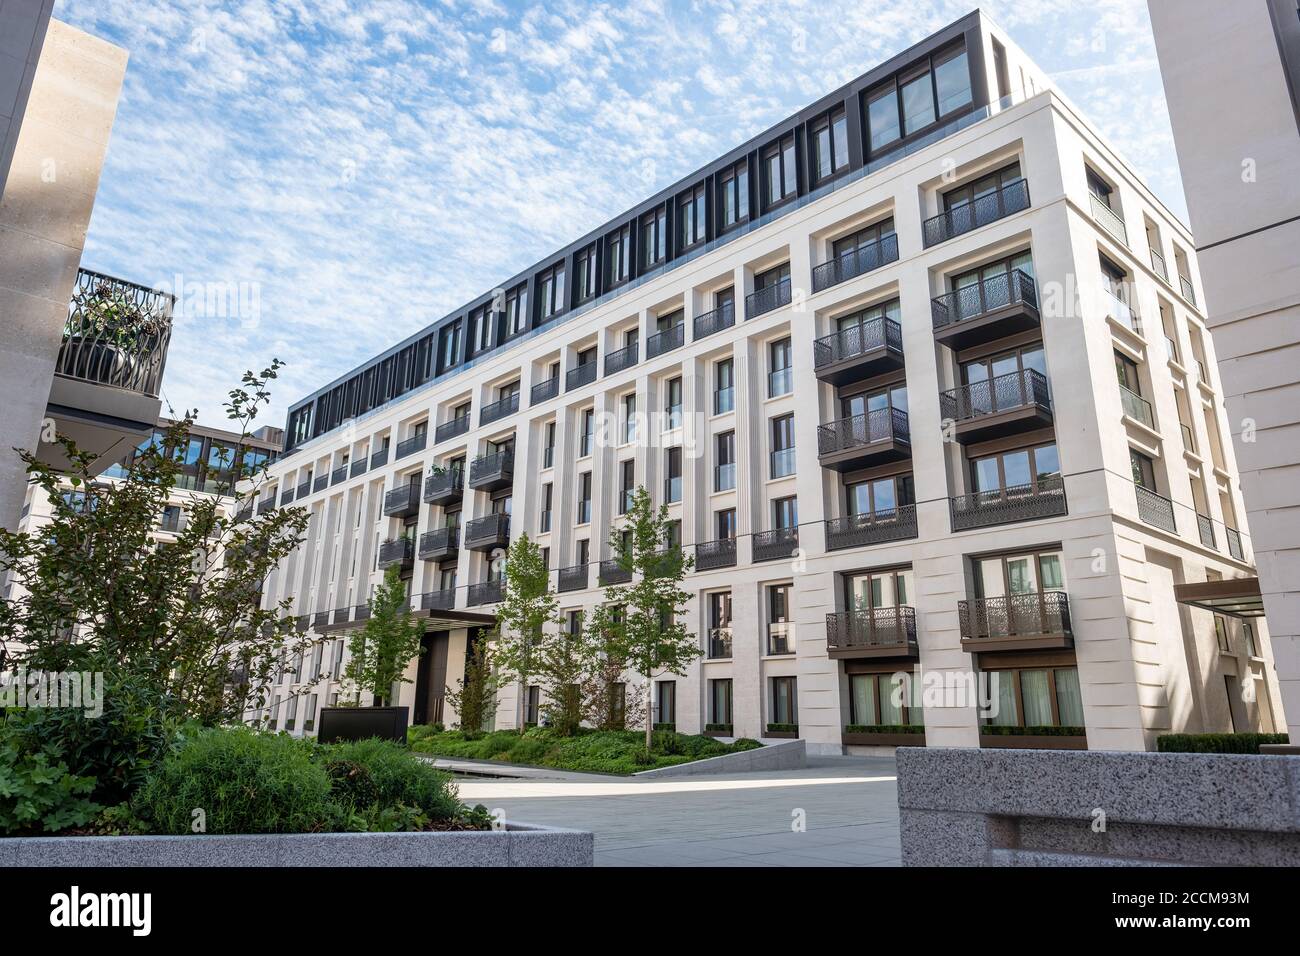 Chelsea Barracks residential development off Pimlico Road in West London- UK Stock Photo